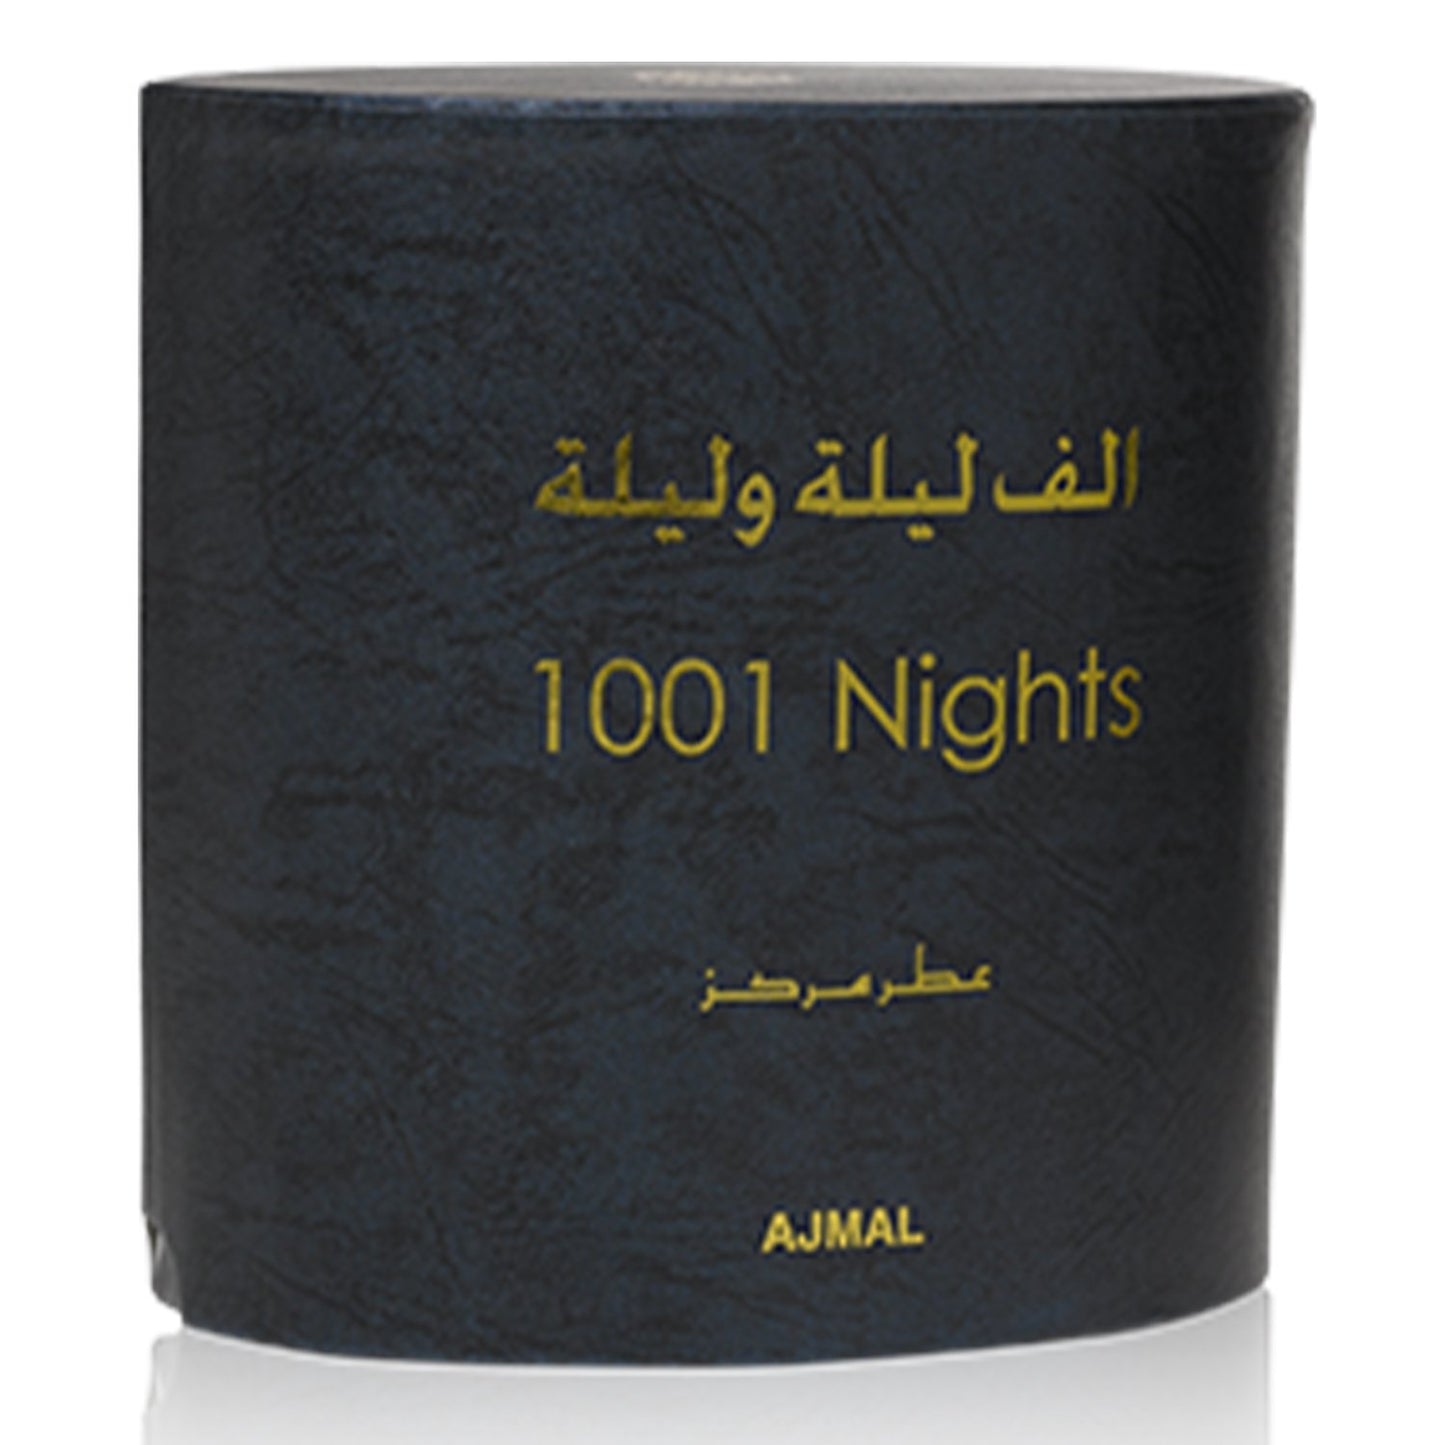 1001 Nights (Alf Lail o Lail) Concentrated Perfume Oil 30ml Ajmal-almanaar Islamic Store